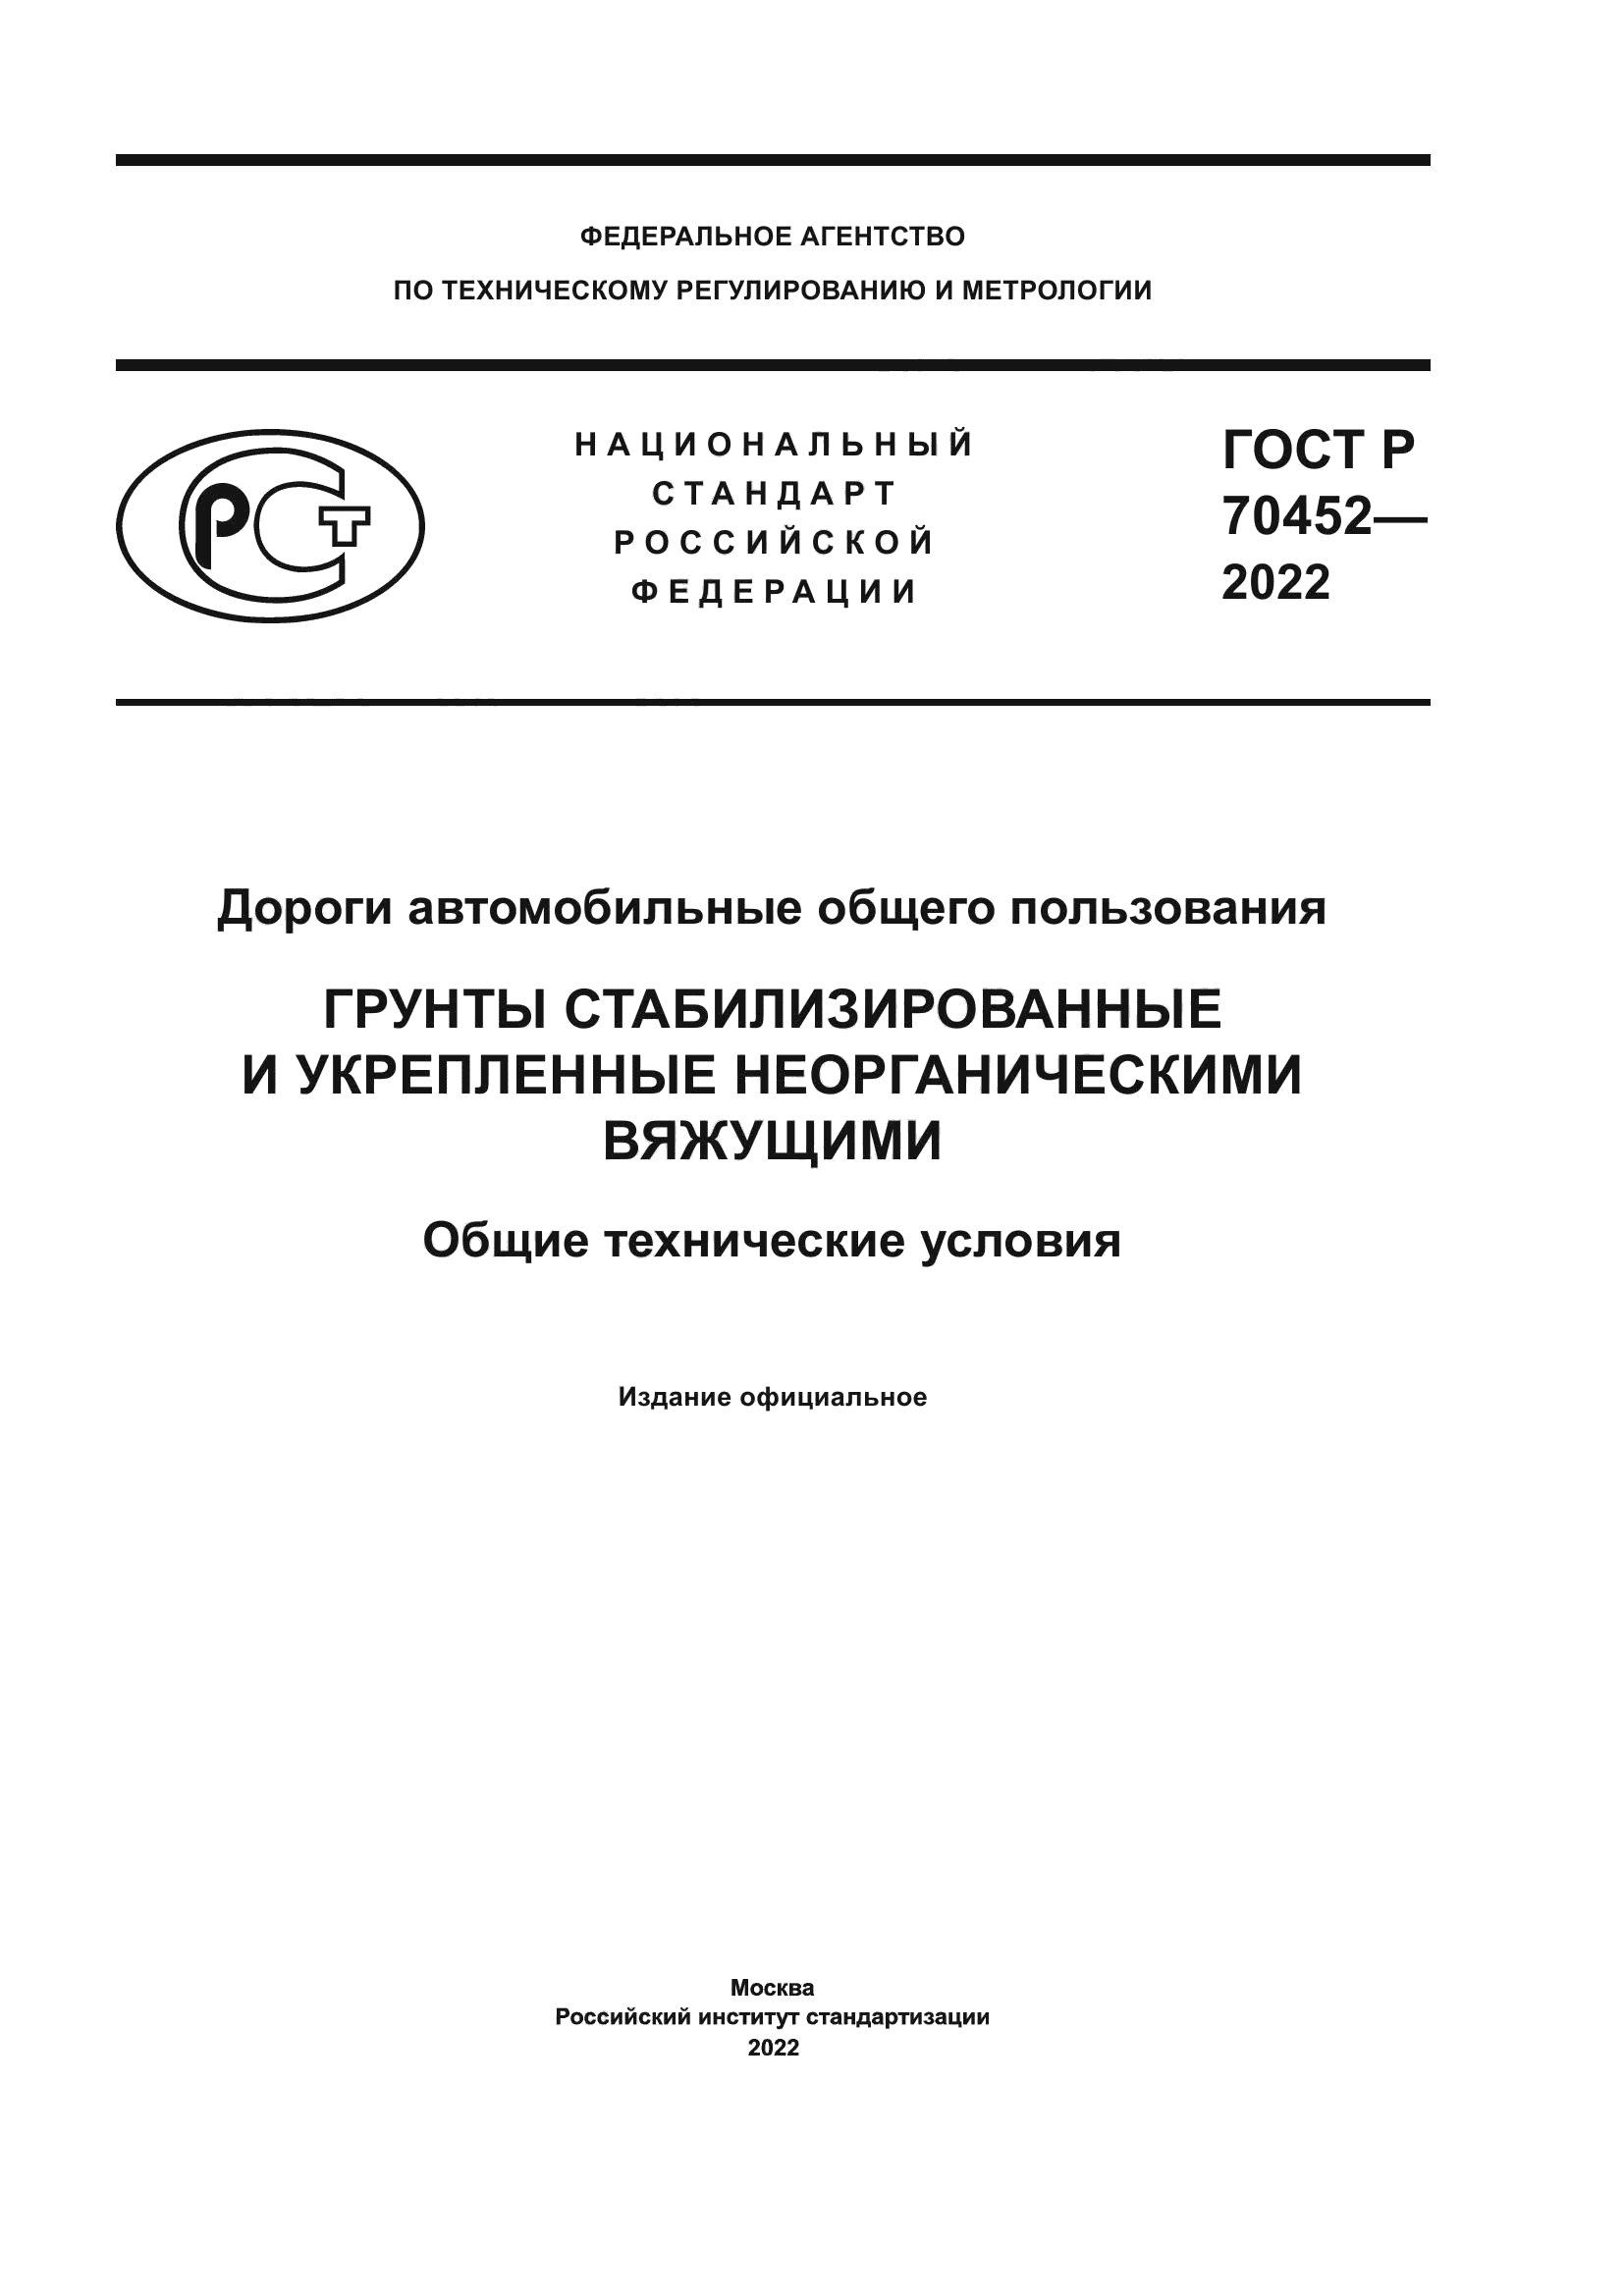 ГОСТ Р 70452-2022